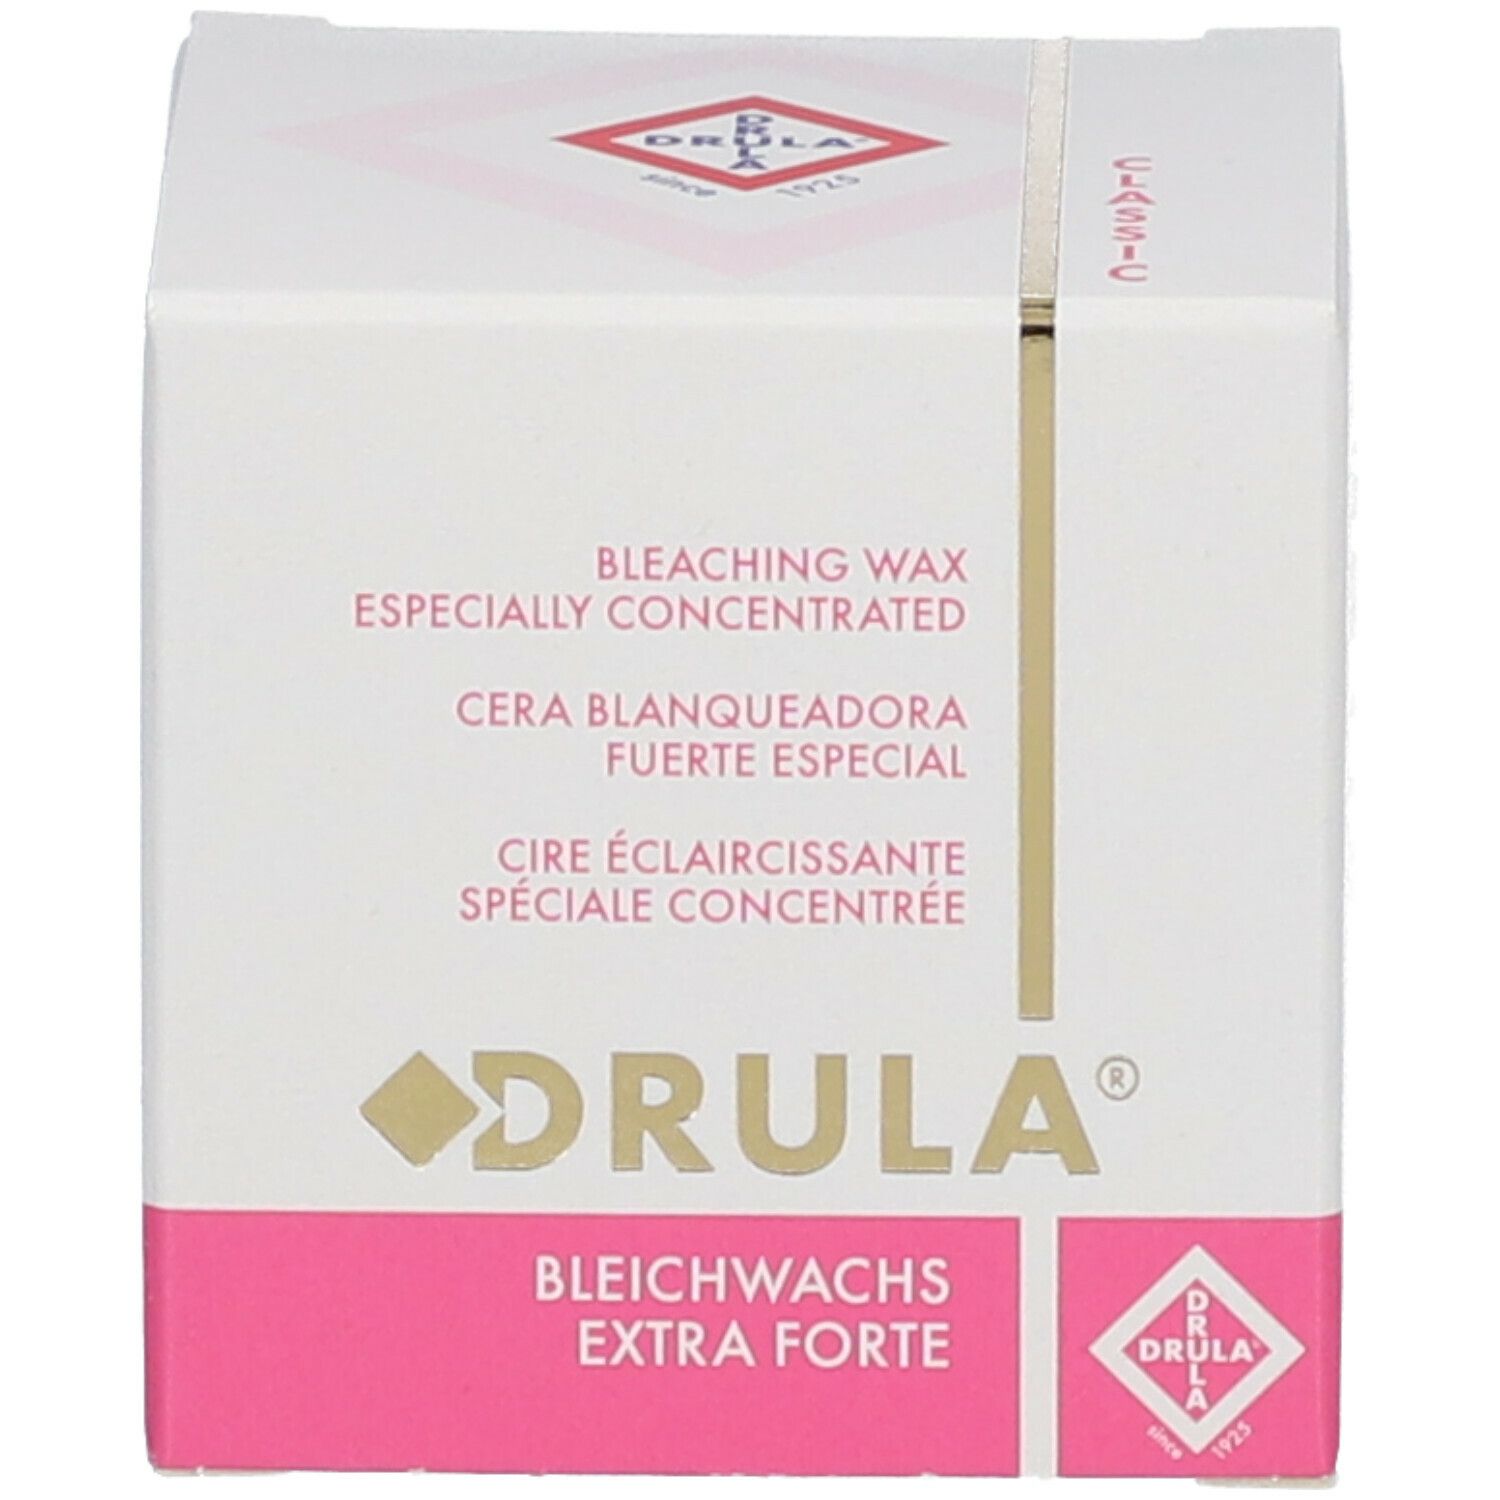 DRULA® Classic Bleichwachs Extra Forte